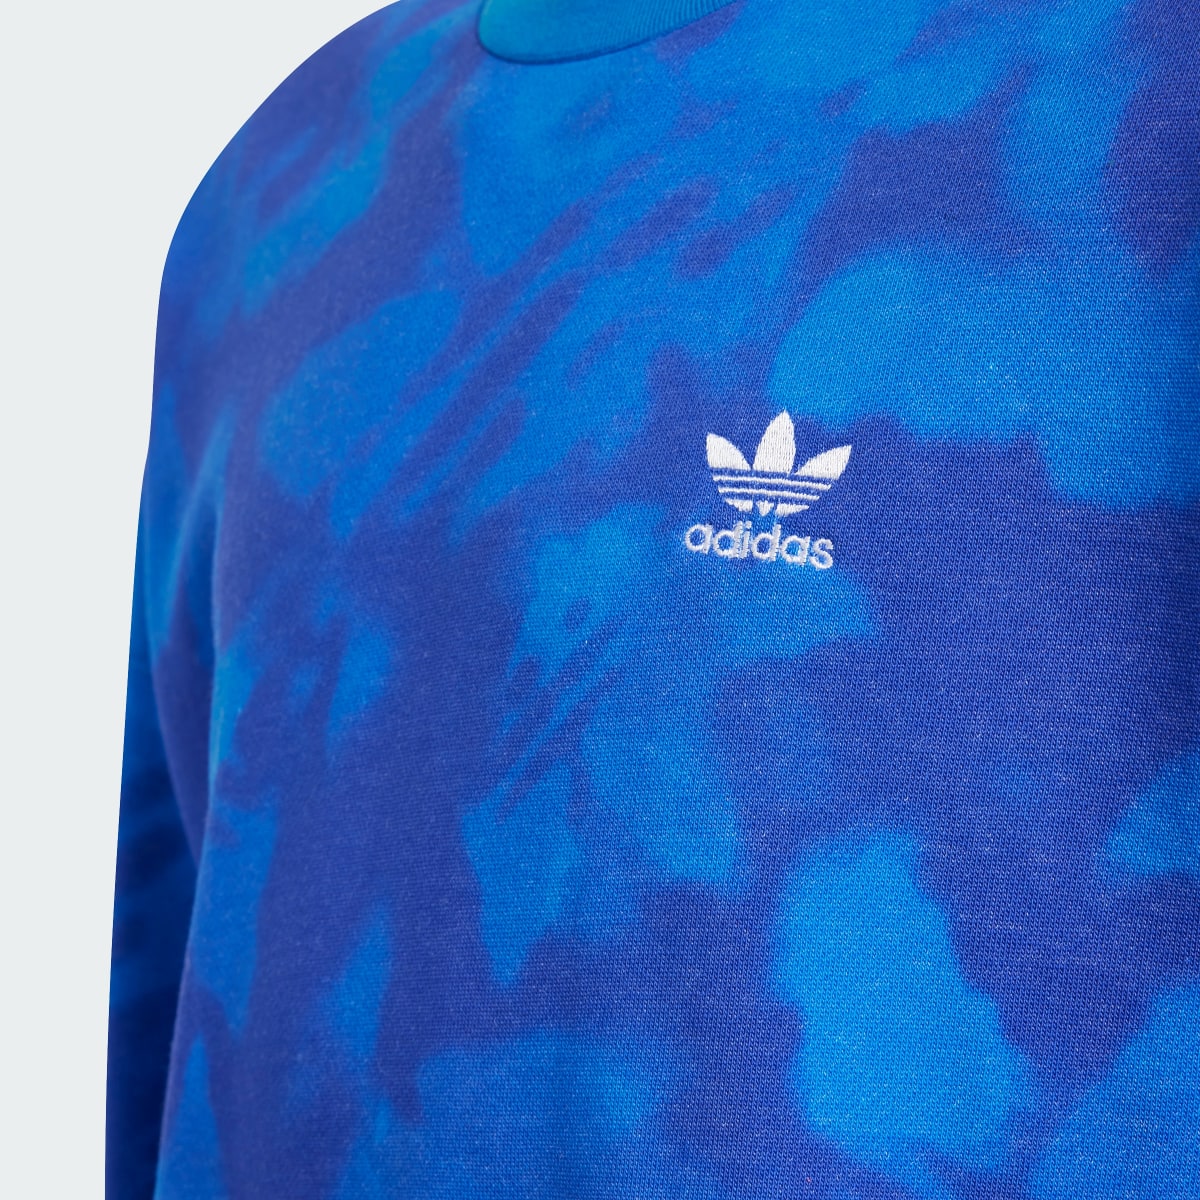 Adidas Summer Allover Print Sweatshirt. 4